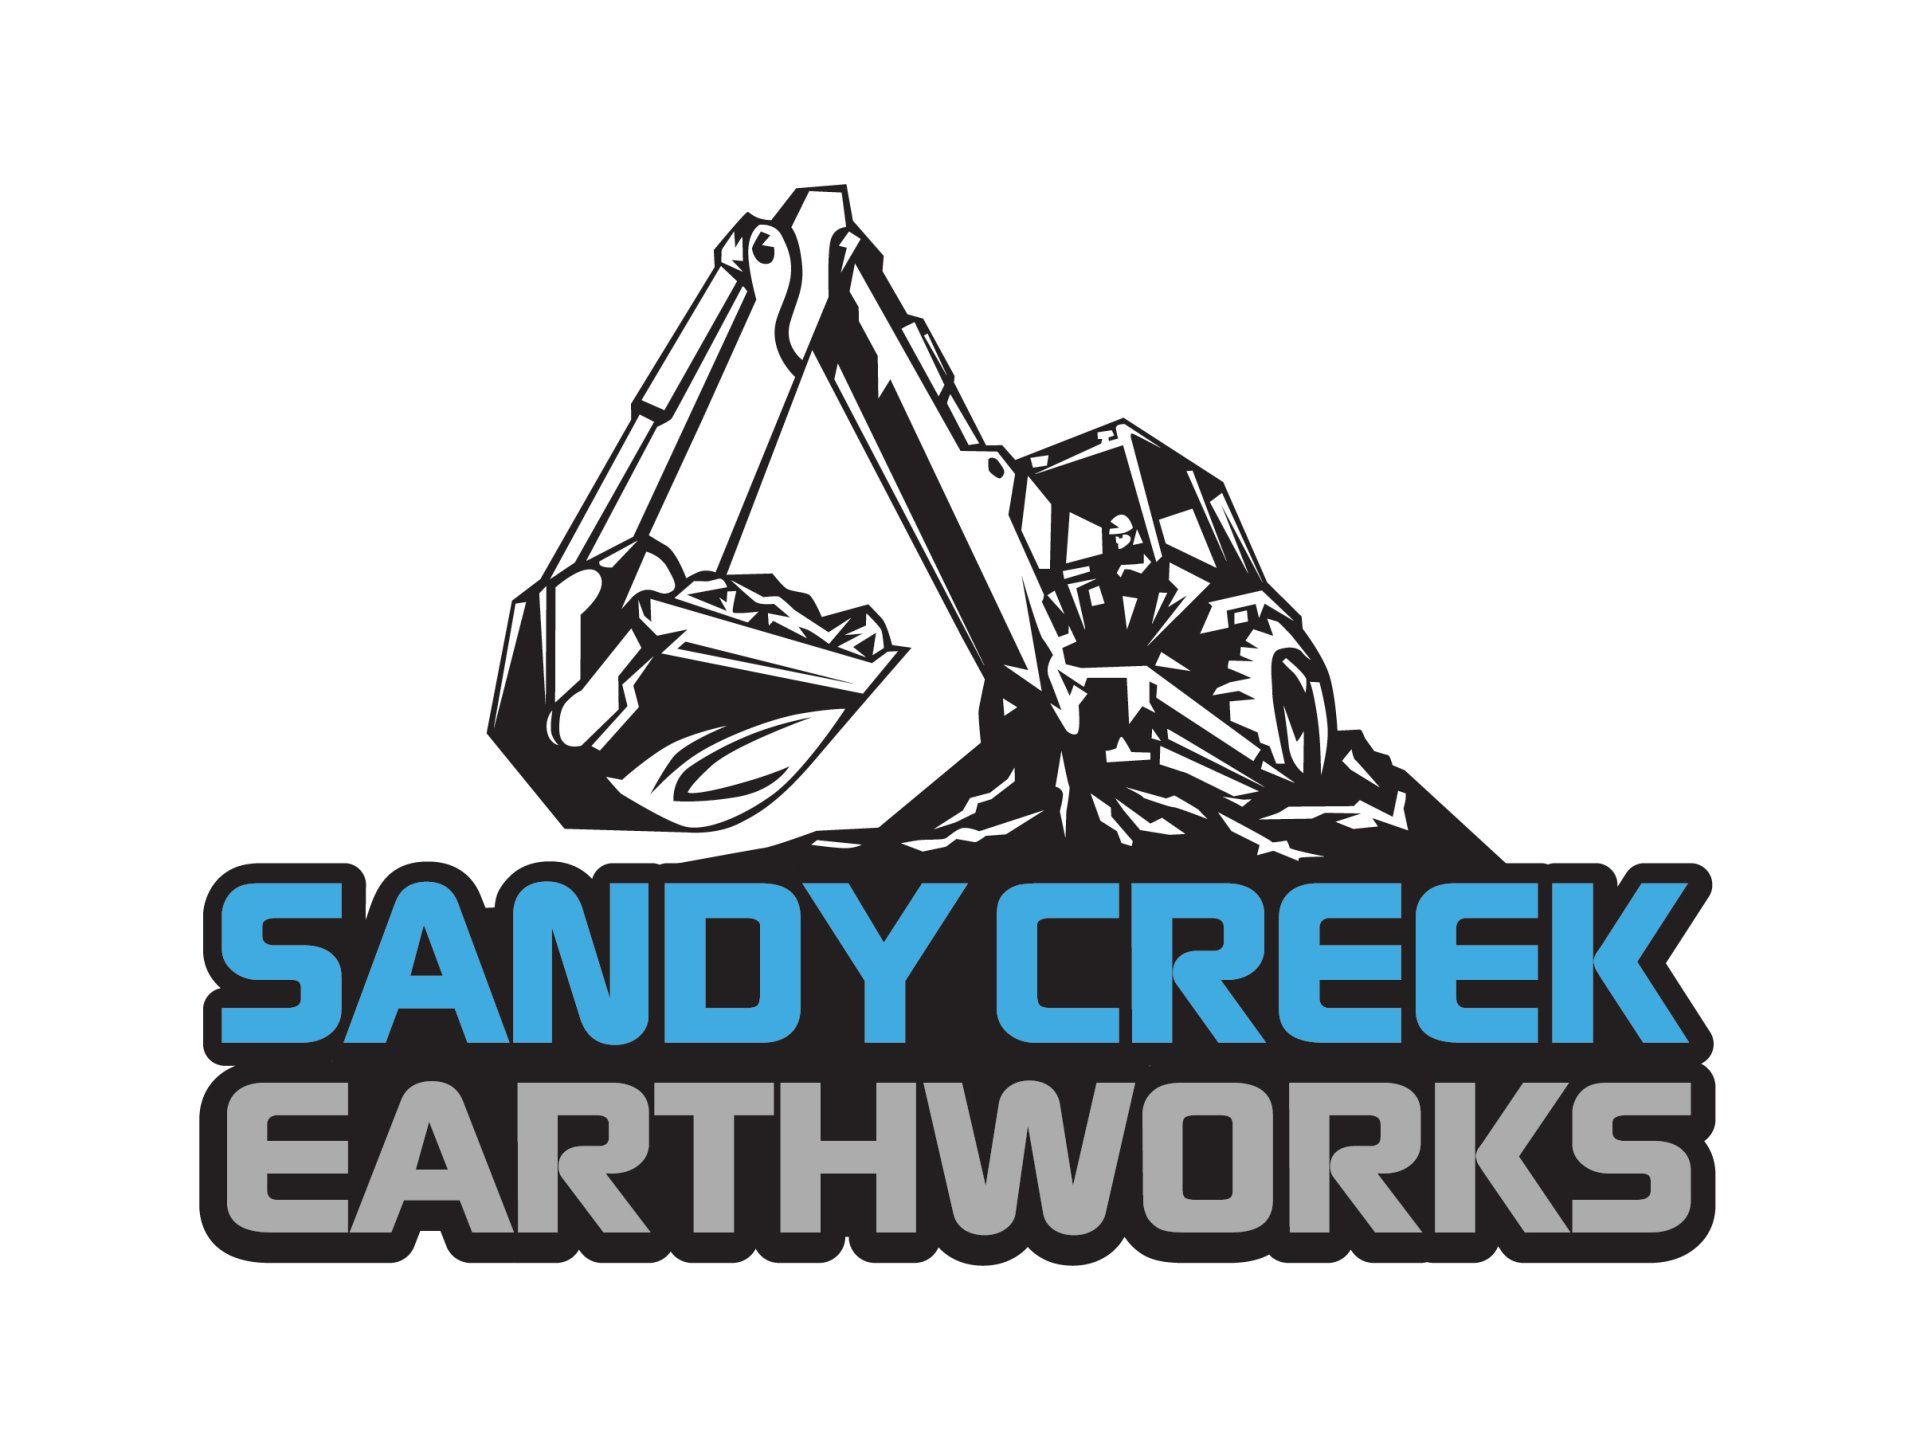 Sandy creek earthworks